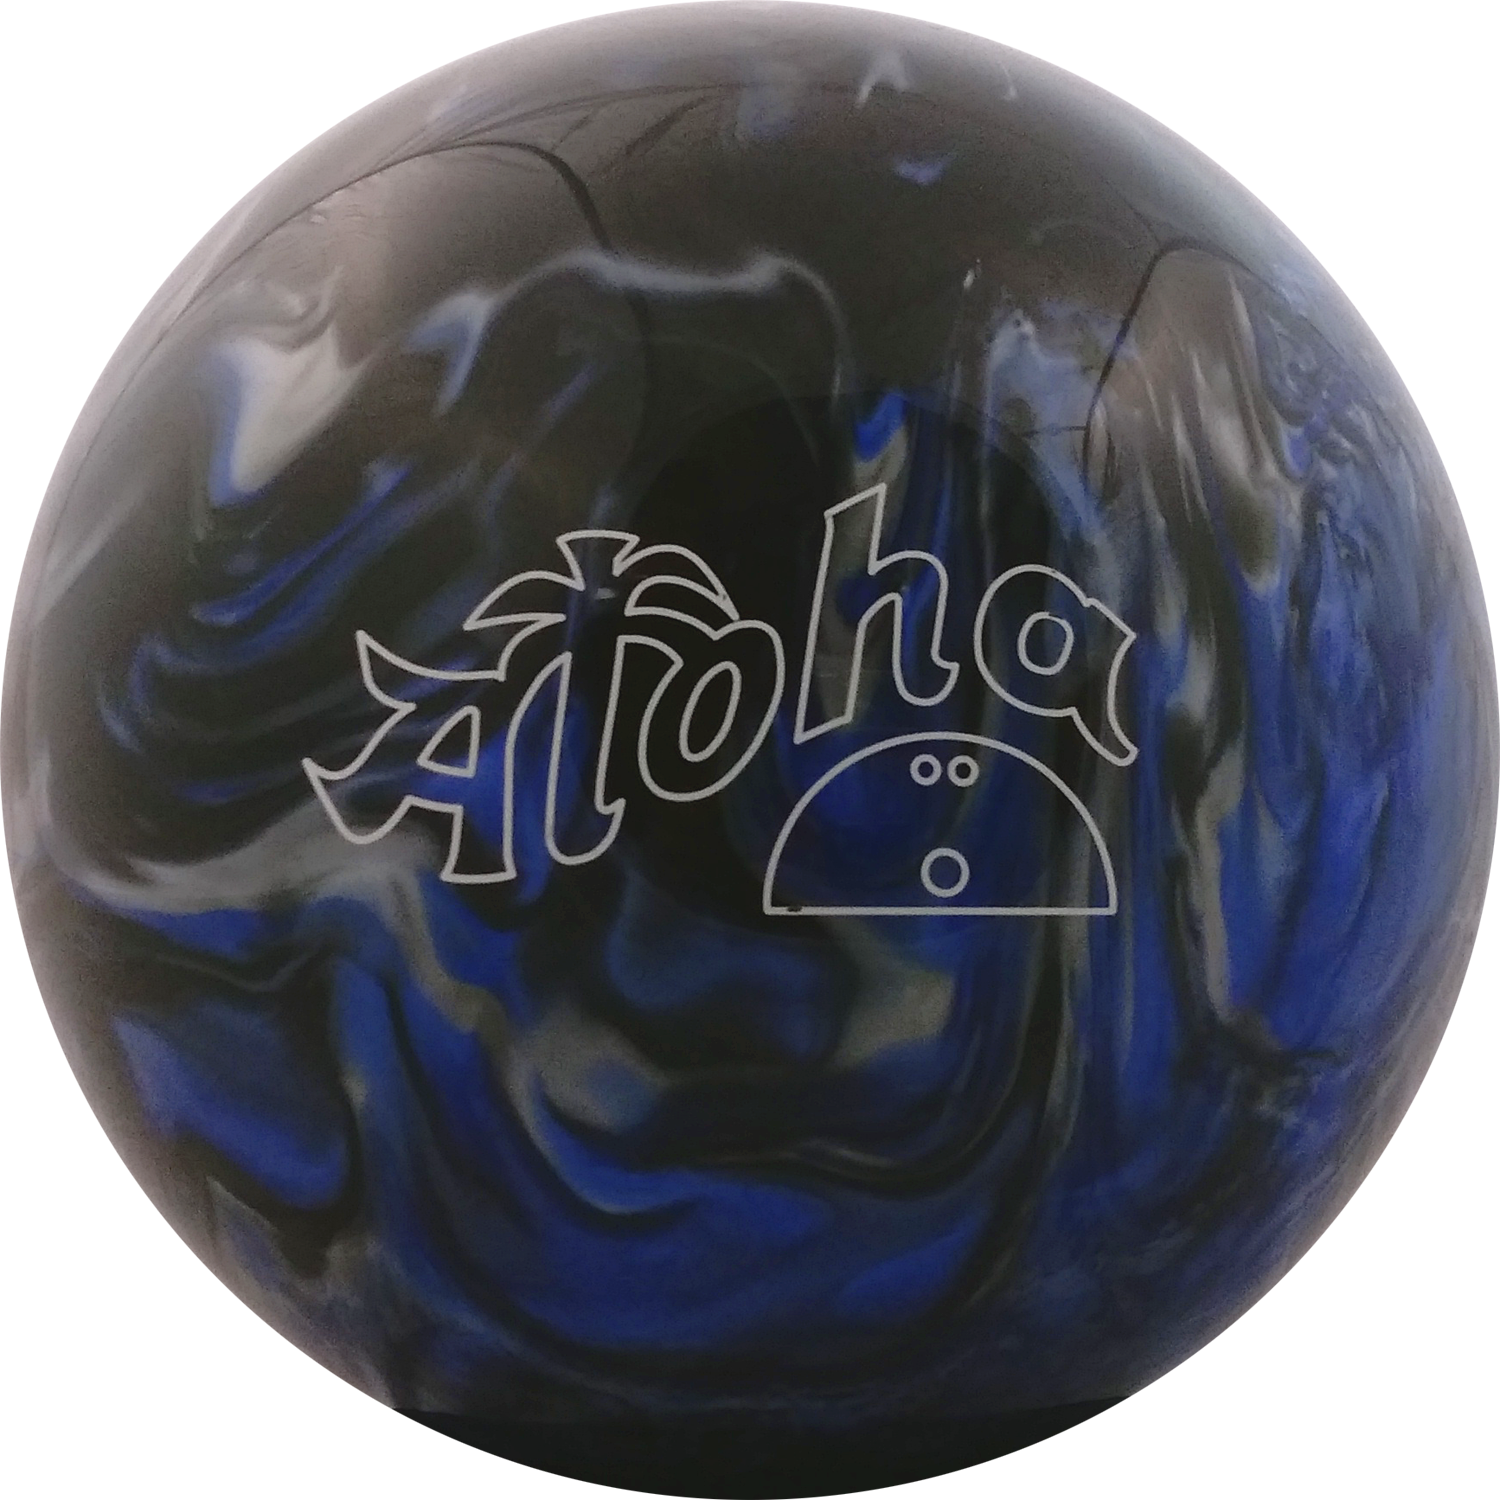 Aloha Zero Space at www.bowling 